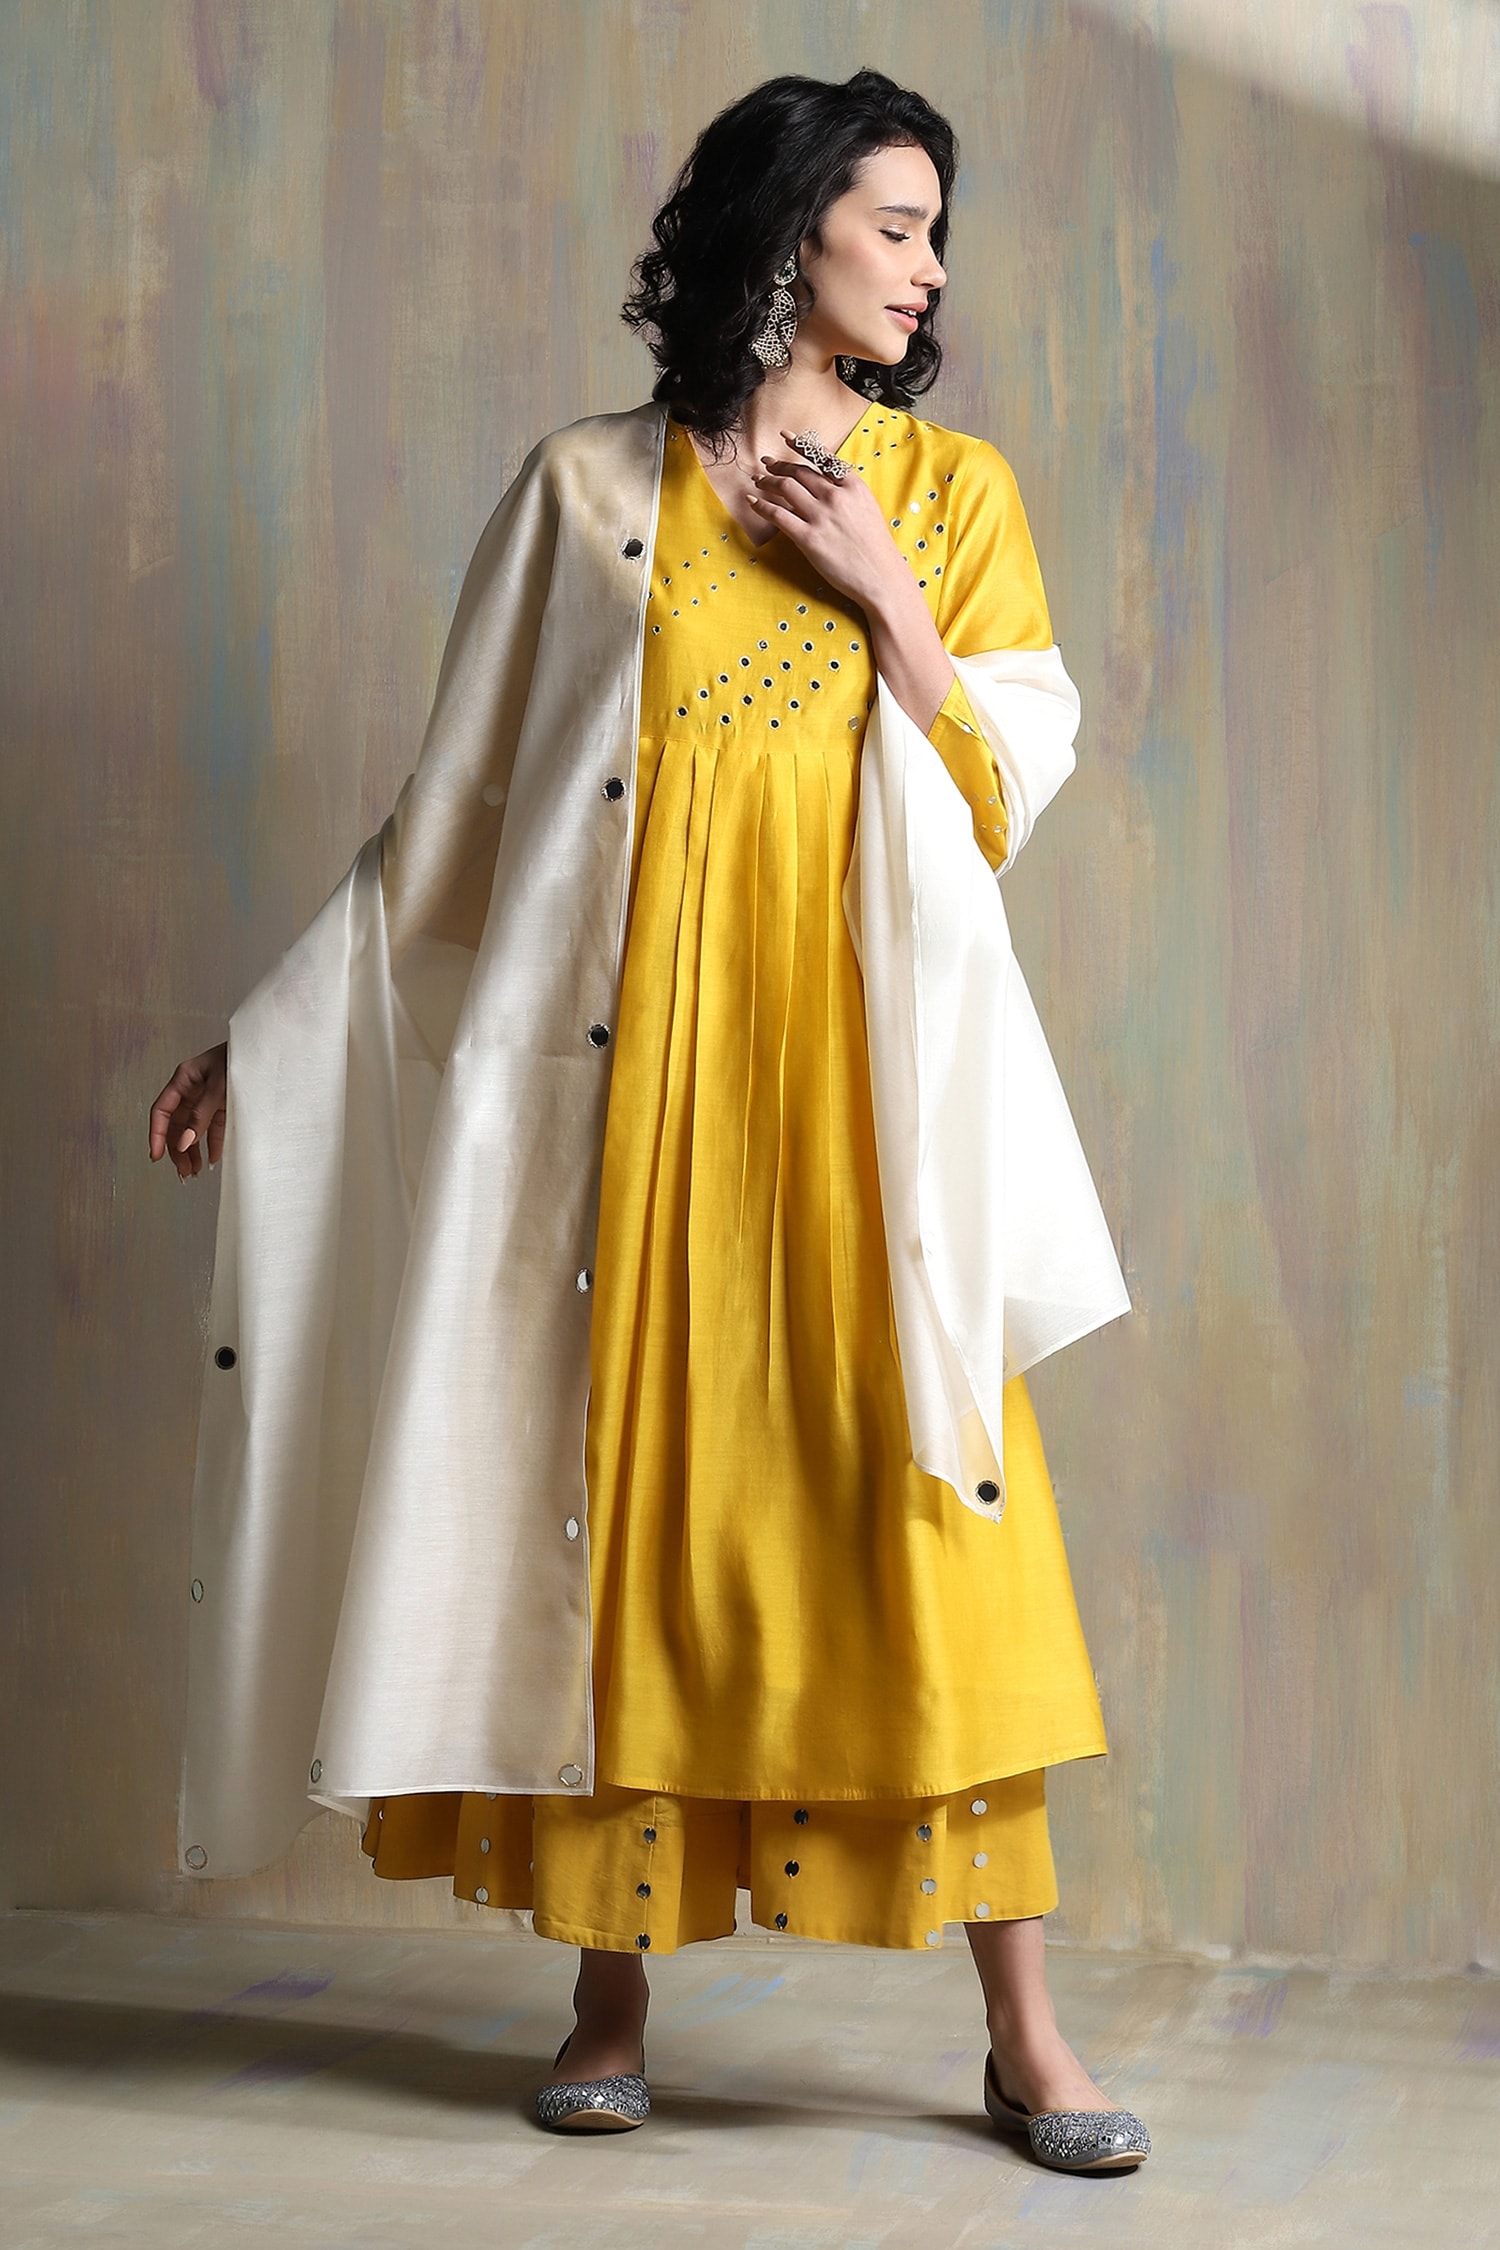 Parinita - Bell Sleeves Print Chikankari Blouse in Pure Cotton (34) -  Studio Kokum